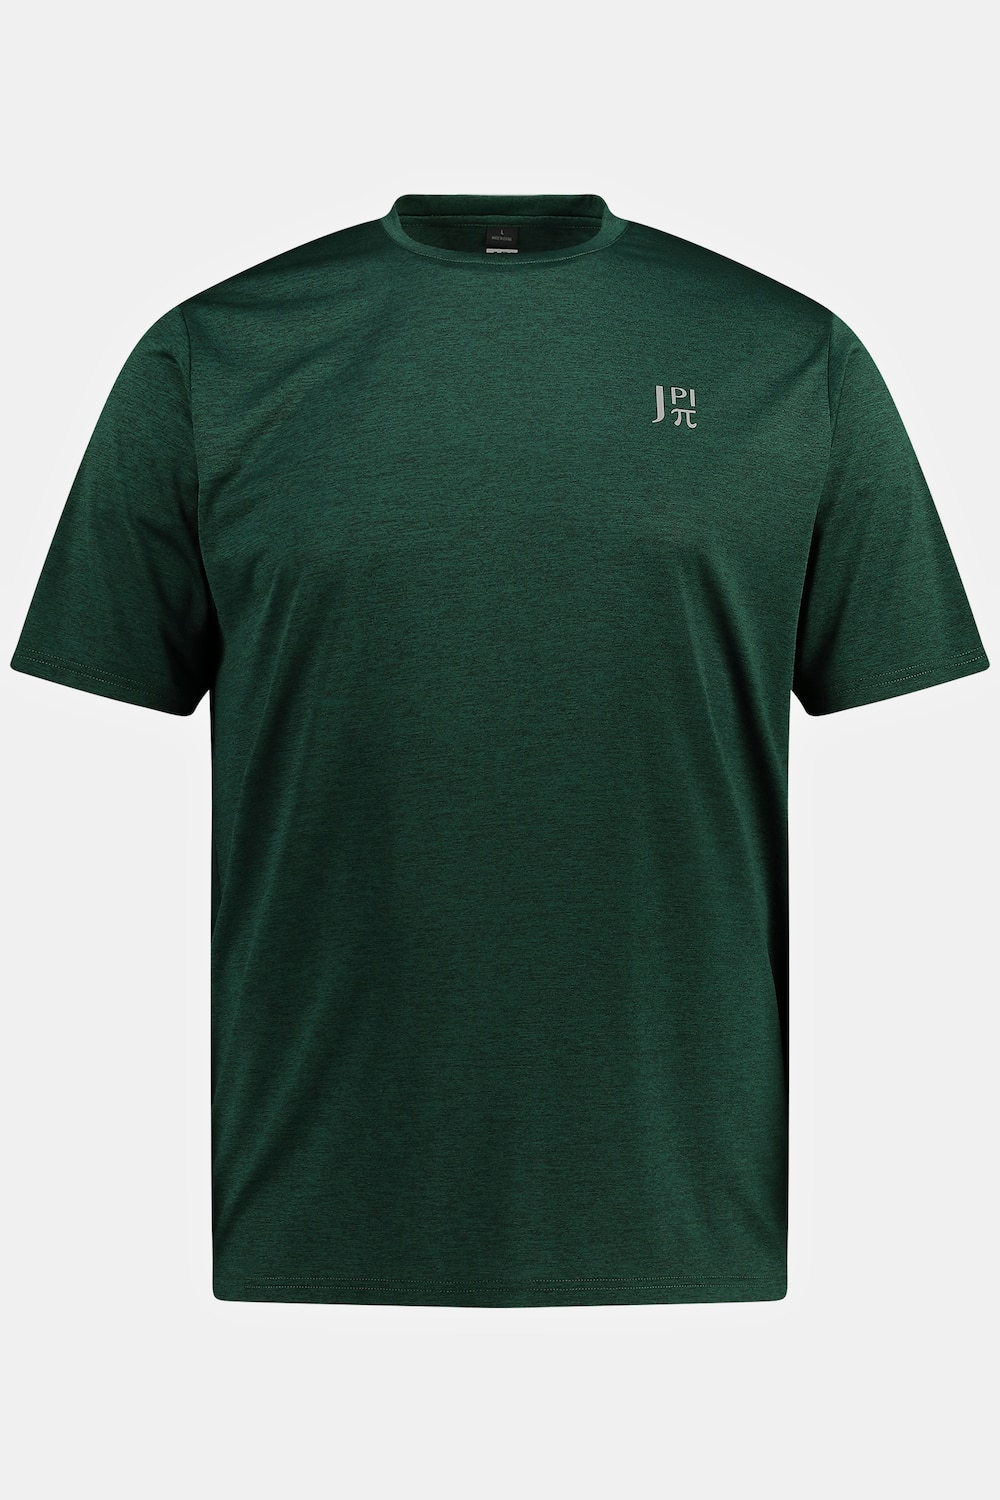 Grote Maten JAY-PI functioneel shirt FLEXNAMIC®male, groen, Maat: 5XL, Polyester, JAY-PI